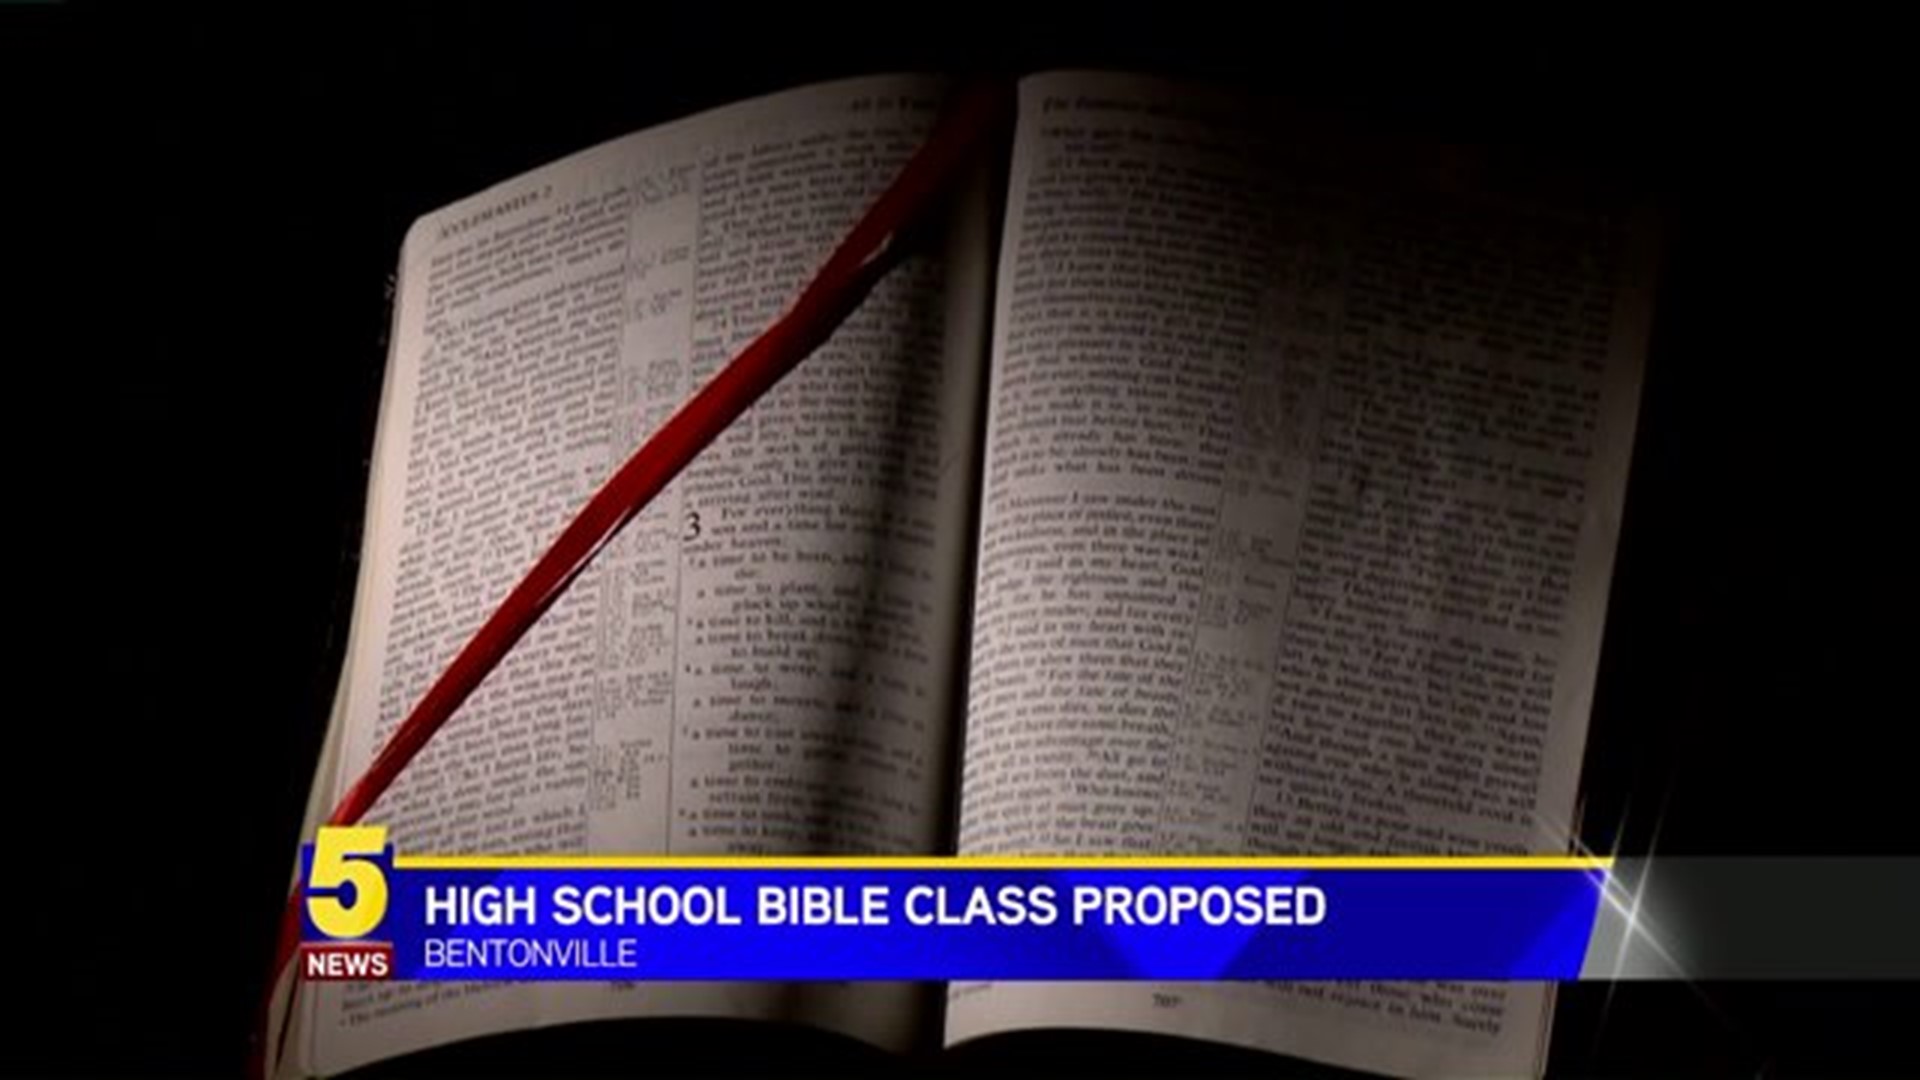 BENTONVILLE HIGH SCHOOL BIBLE CLASS PROPOSAL